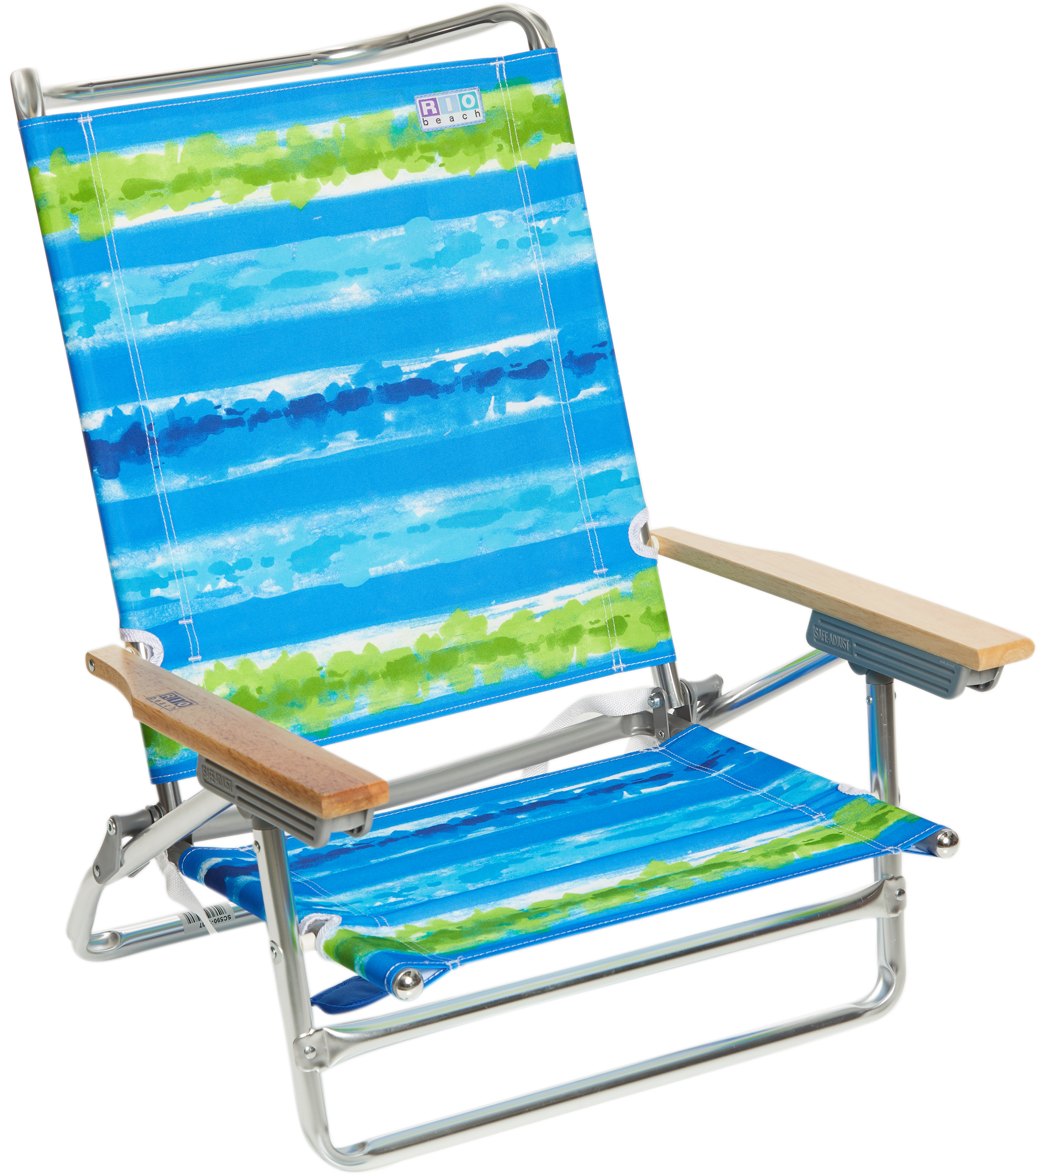 New Rio Brands 5 Position Beach Chair 